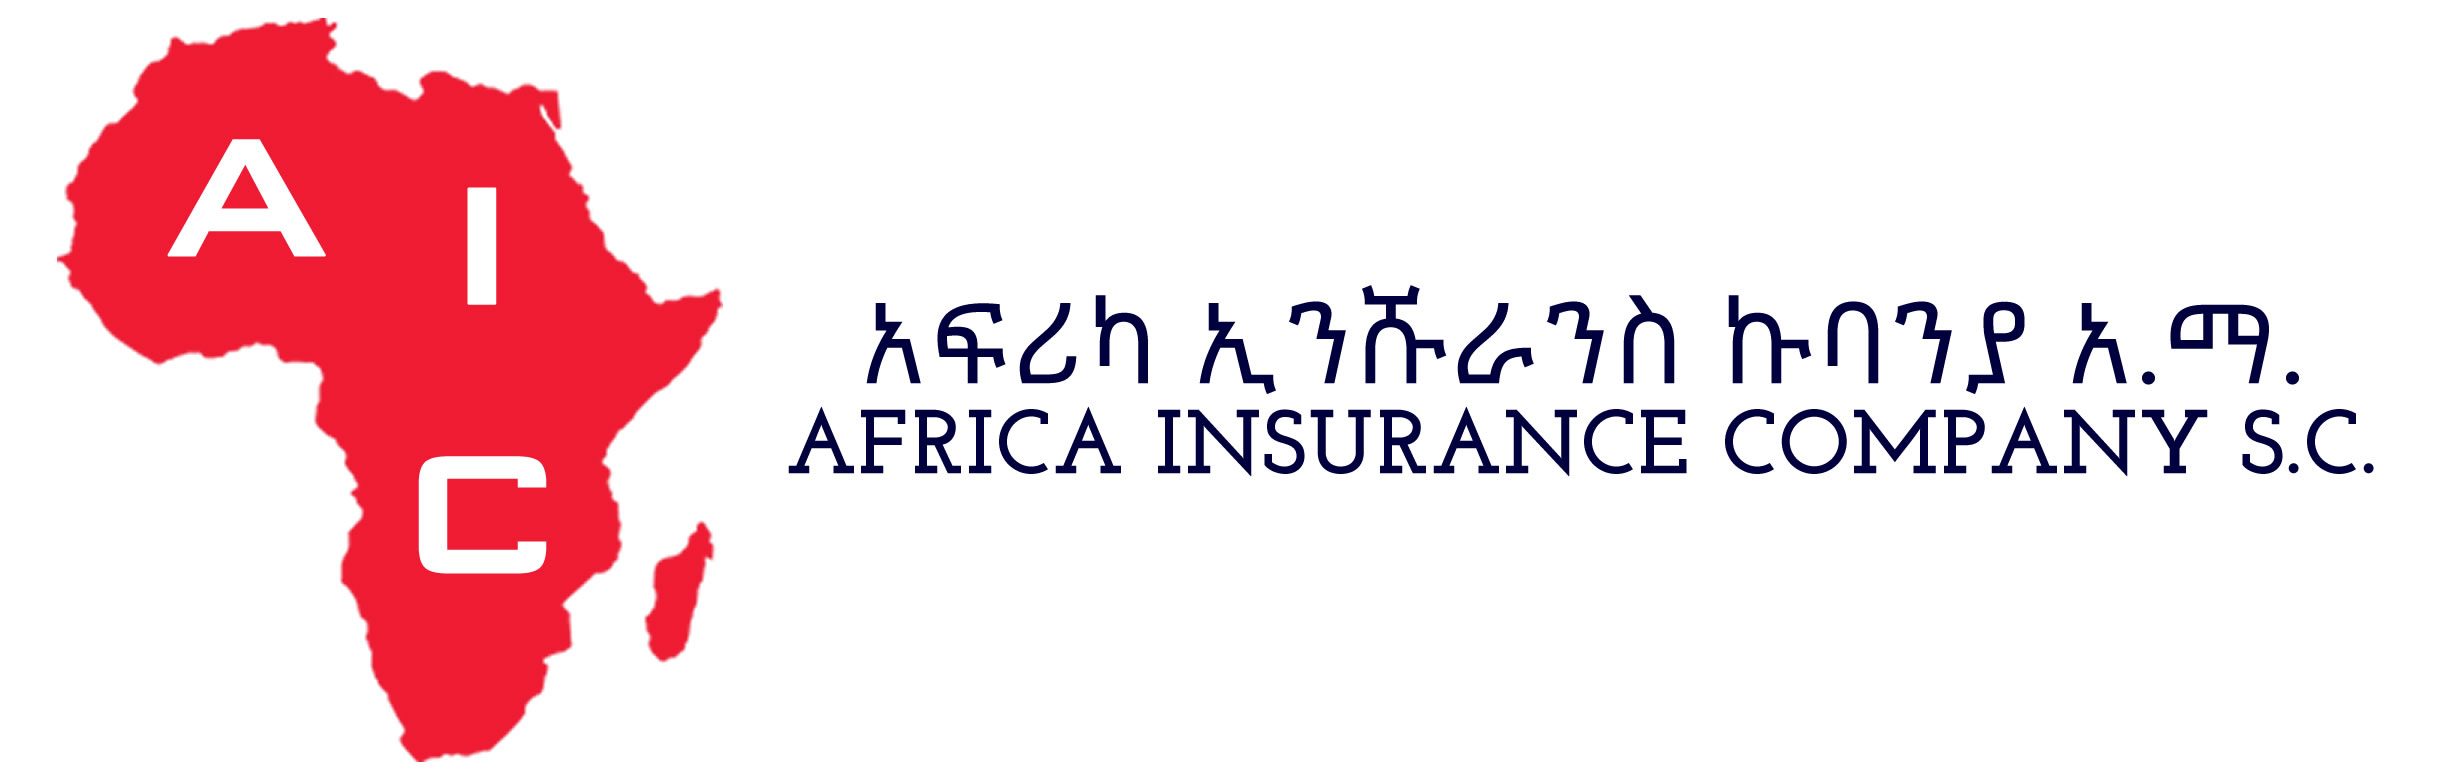 Africa Insurance Company s.c.